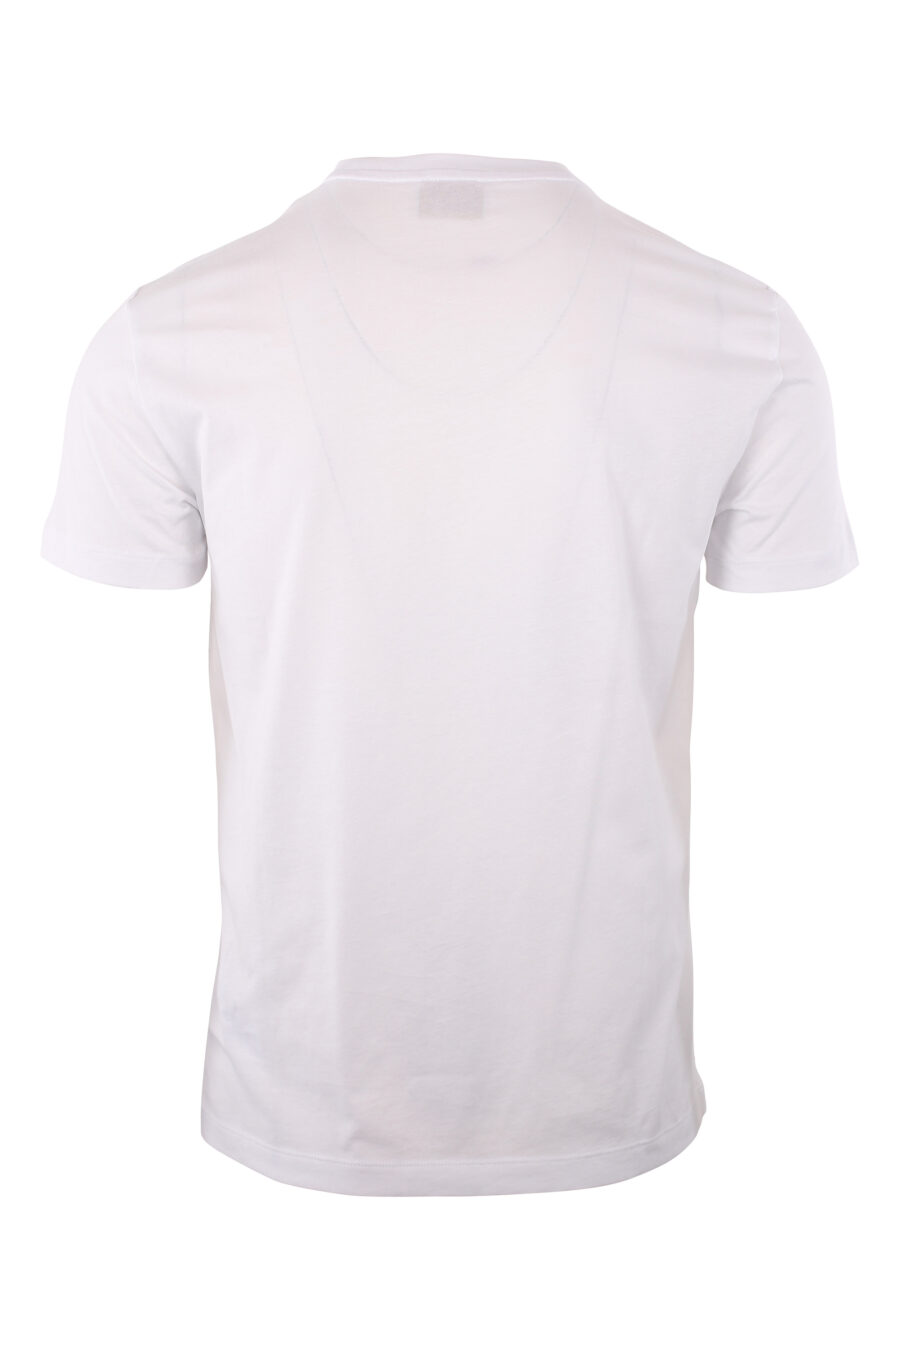 T-shirt branca com maxilogo dourado "lux identity" - IMG 2004